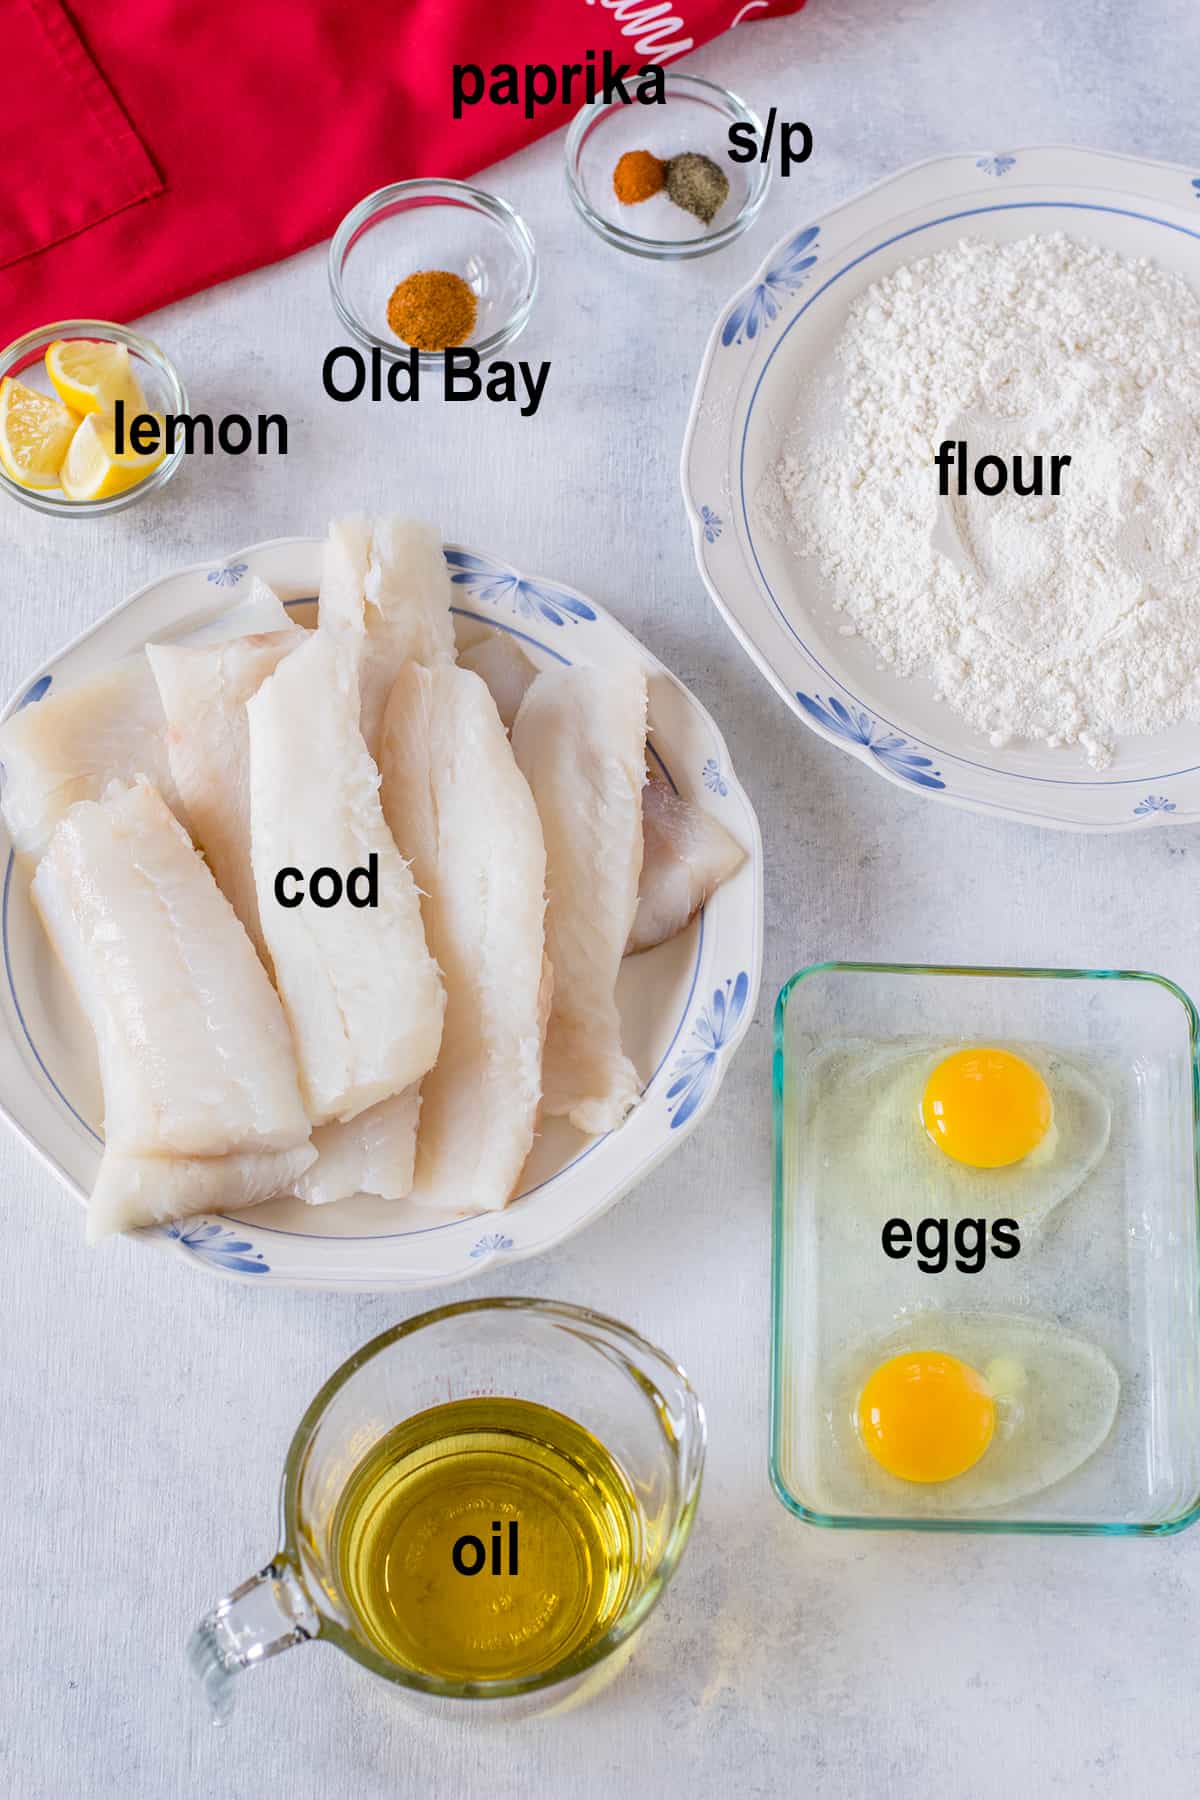 raw fish, lemon, seasonings, flour, eggs, oil